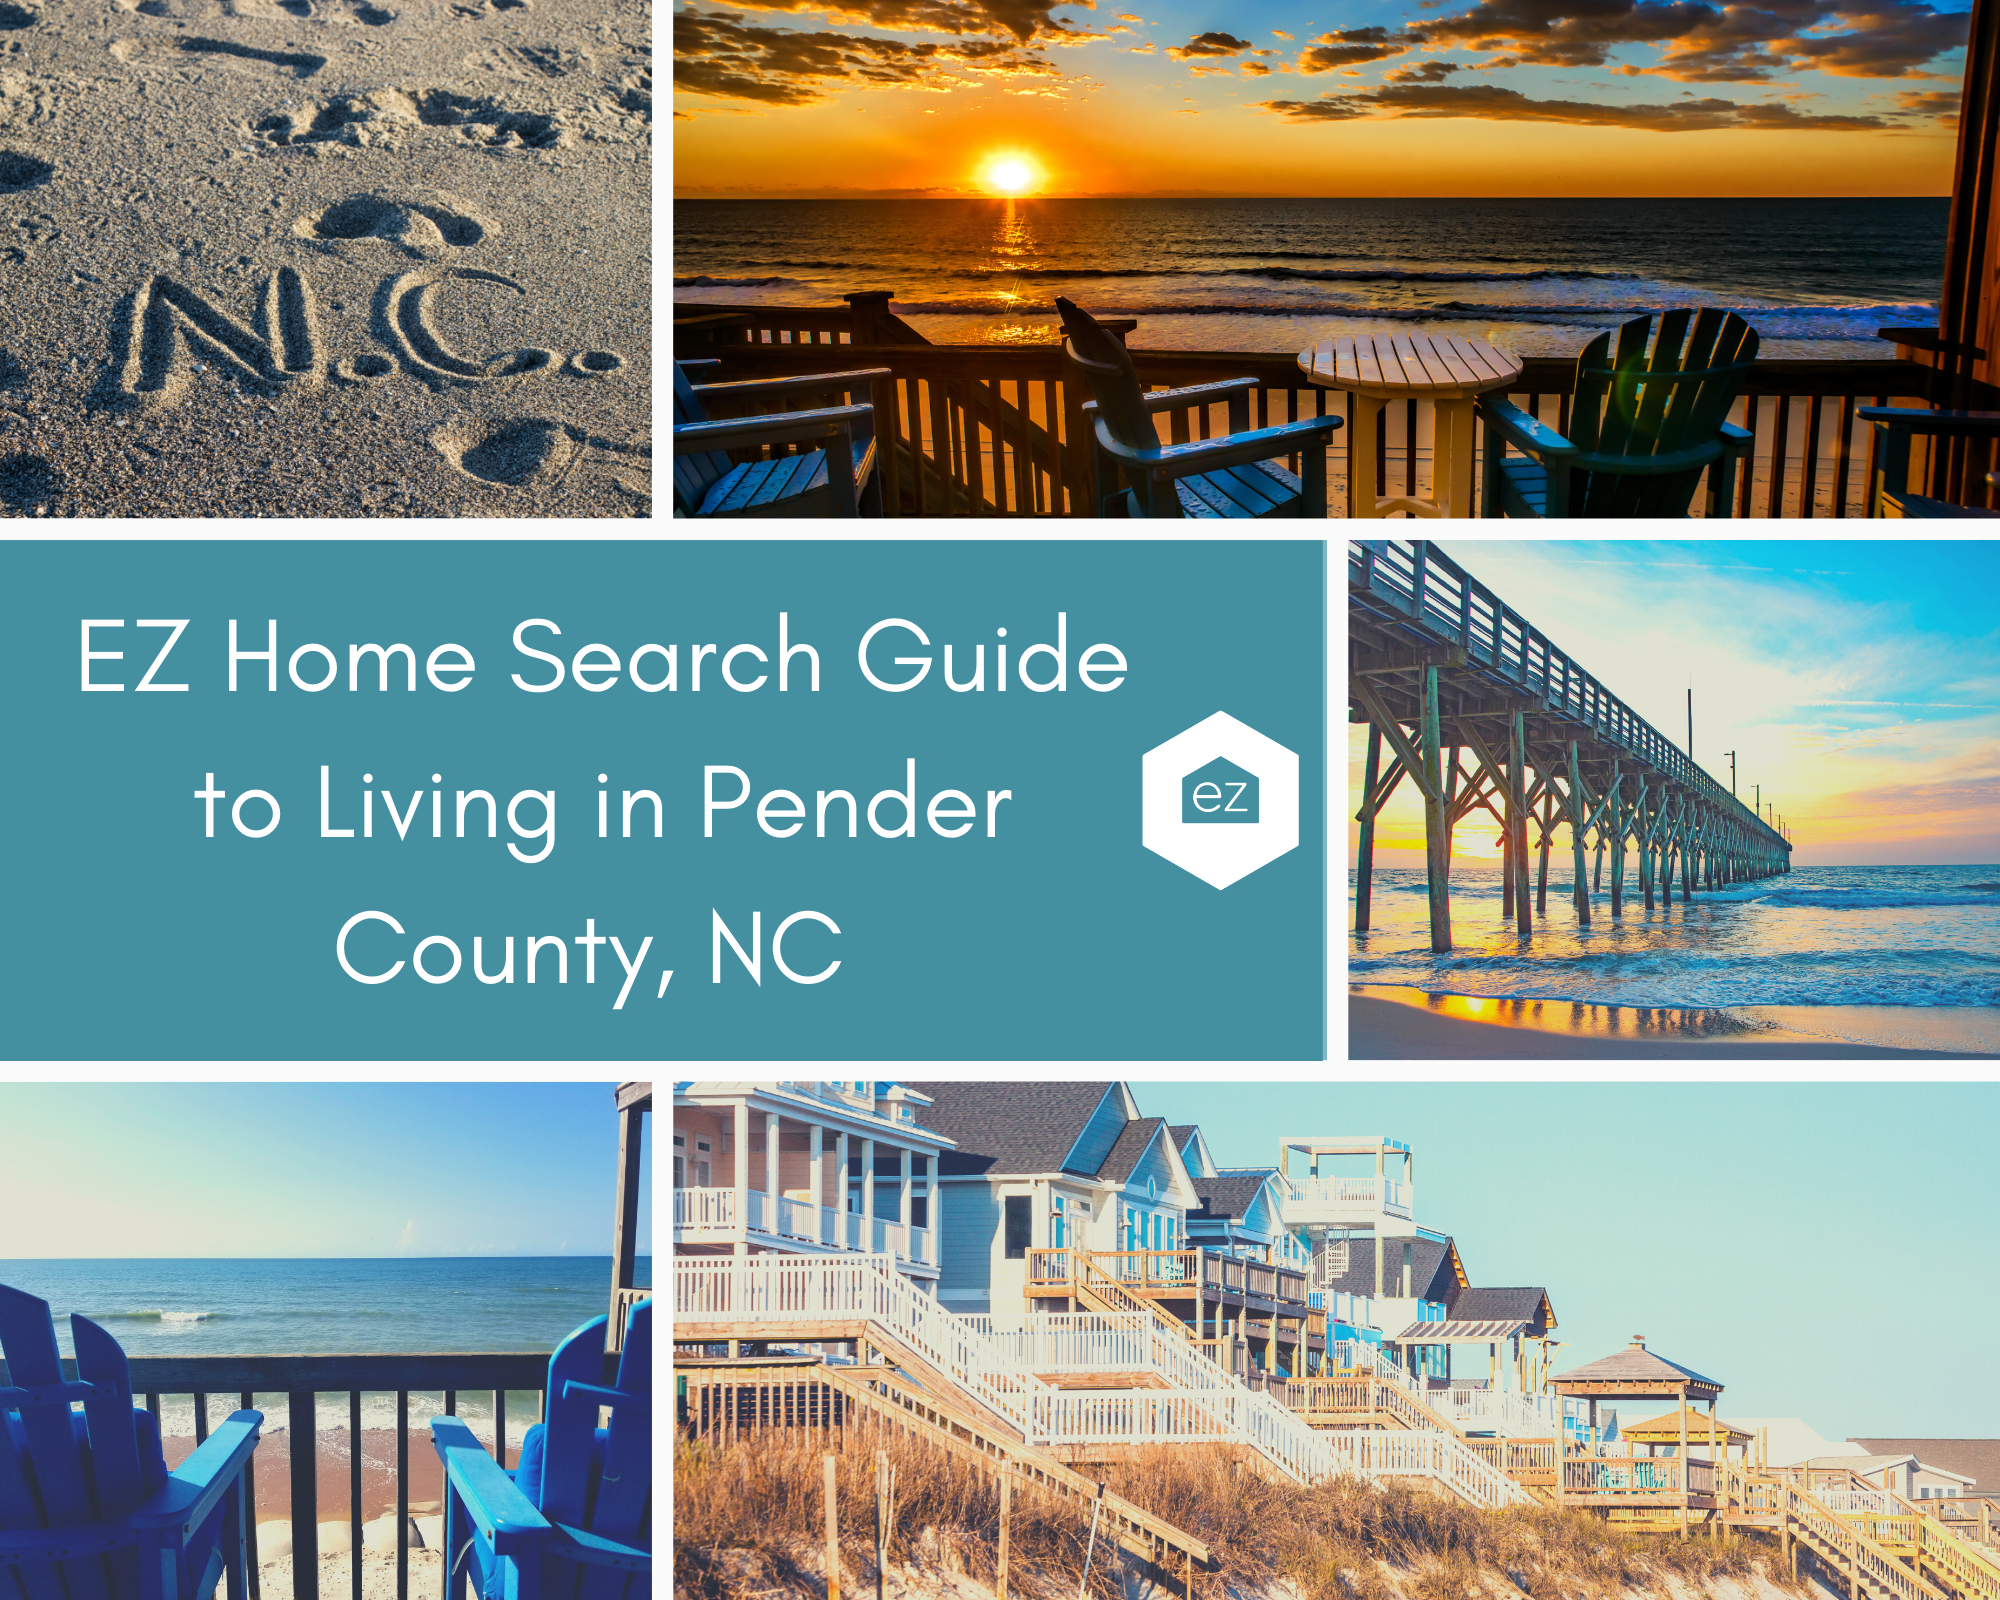 Photos of beaches along North Carolina, and Pender County